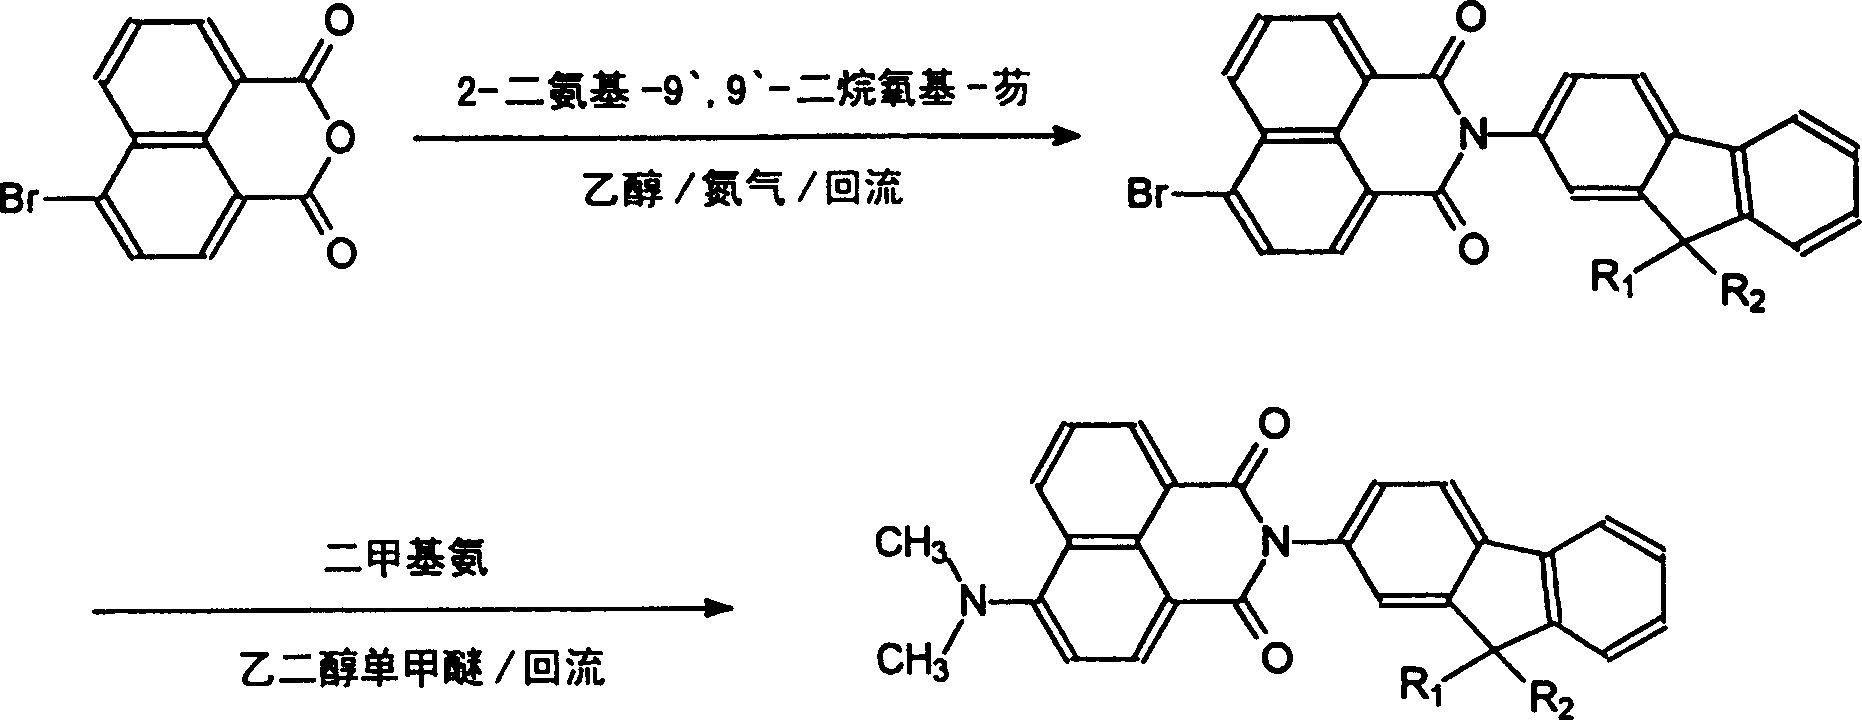 Fluorene-naphthalene imide derivative compound and its application